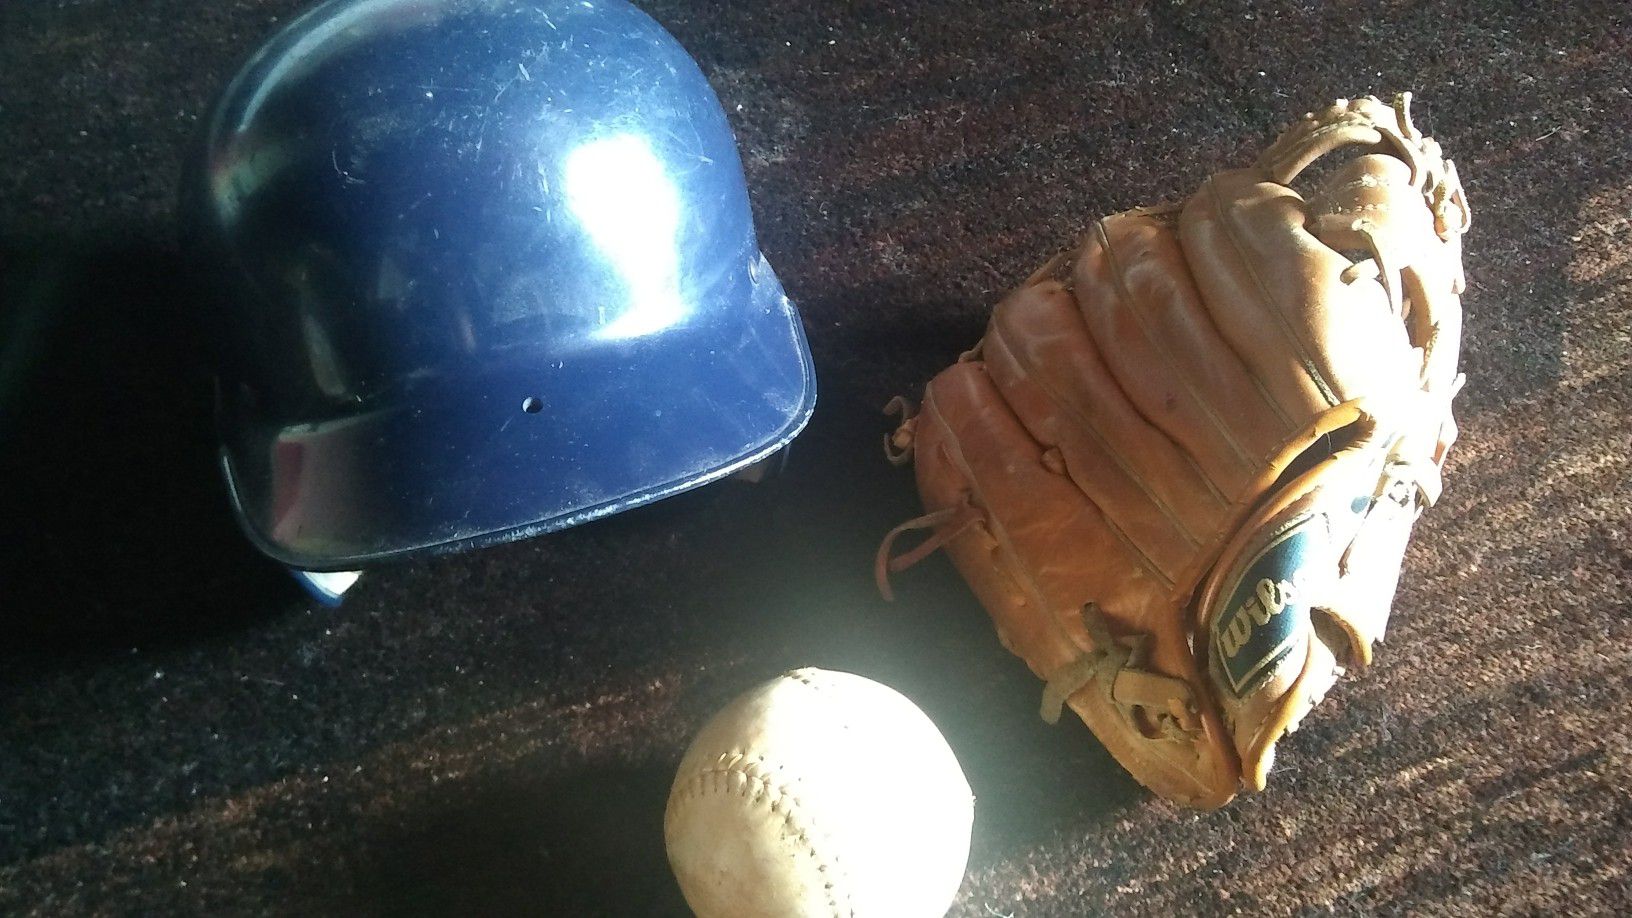 Baseball hat, and ball,no glove